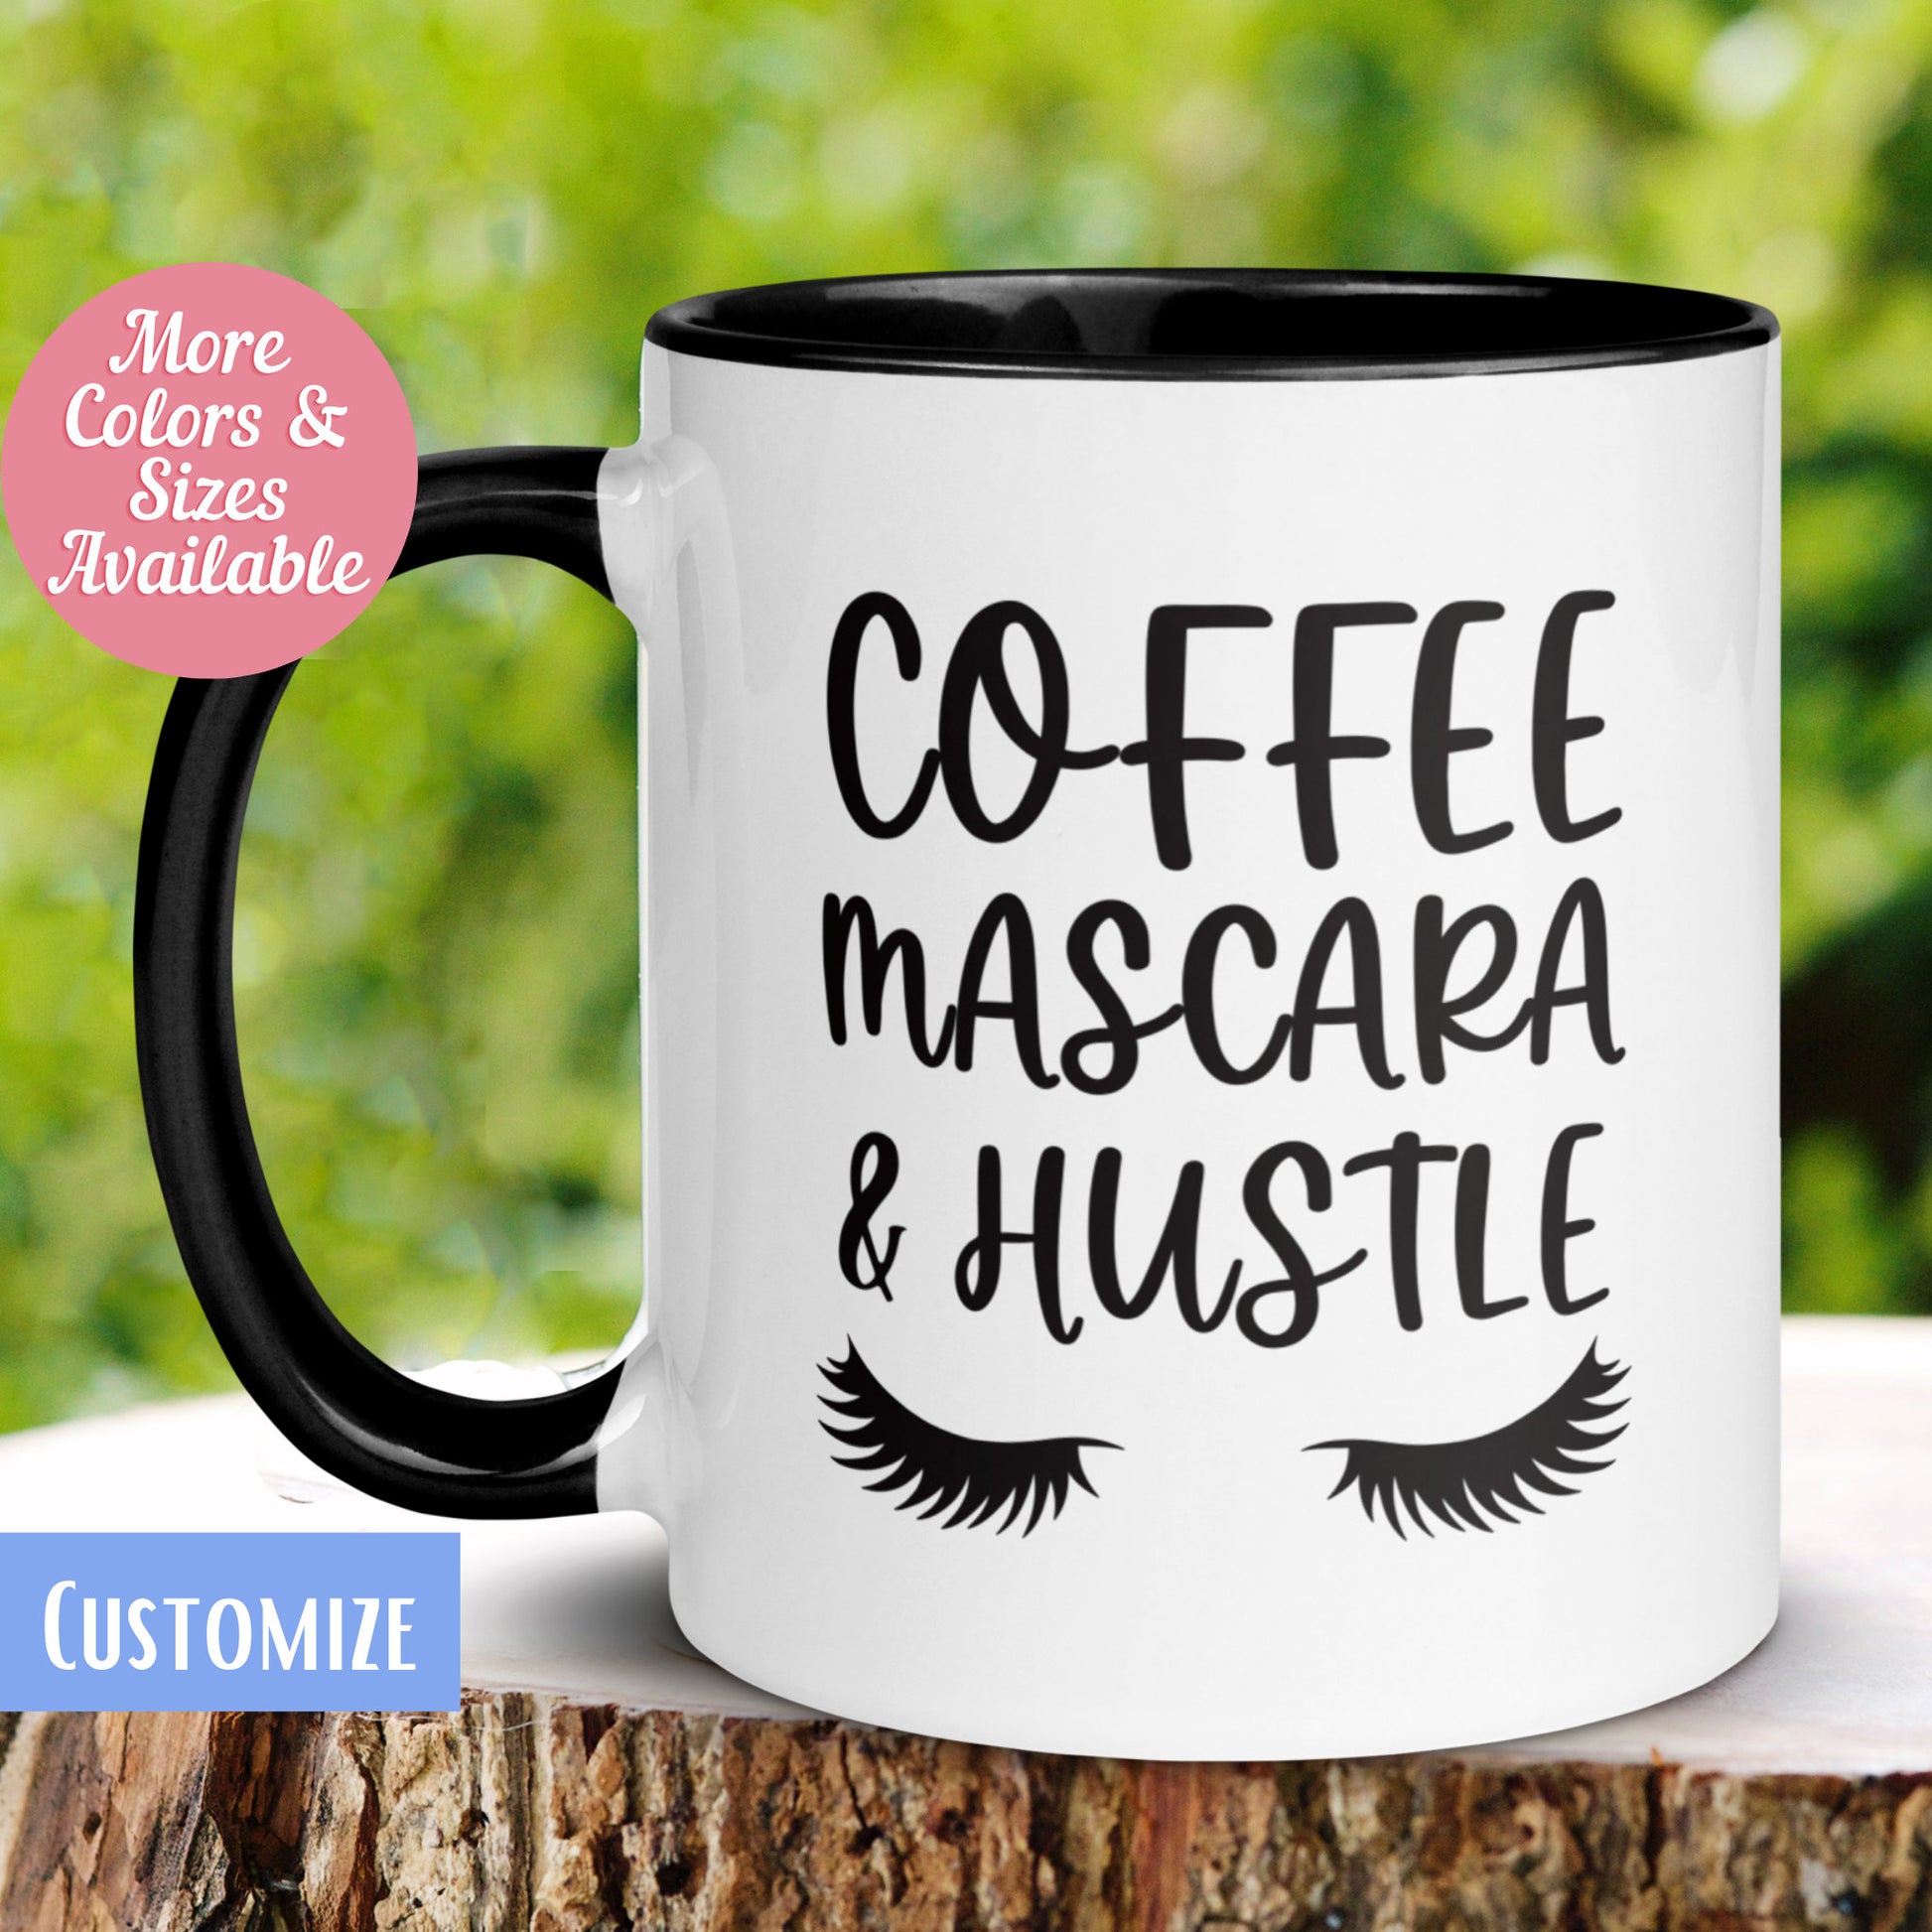 Fashion Mug, Coffee Mascara & Hustle Mug - Zehnaria - FUNNY HUMOR - Mugs